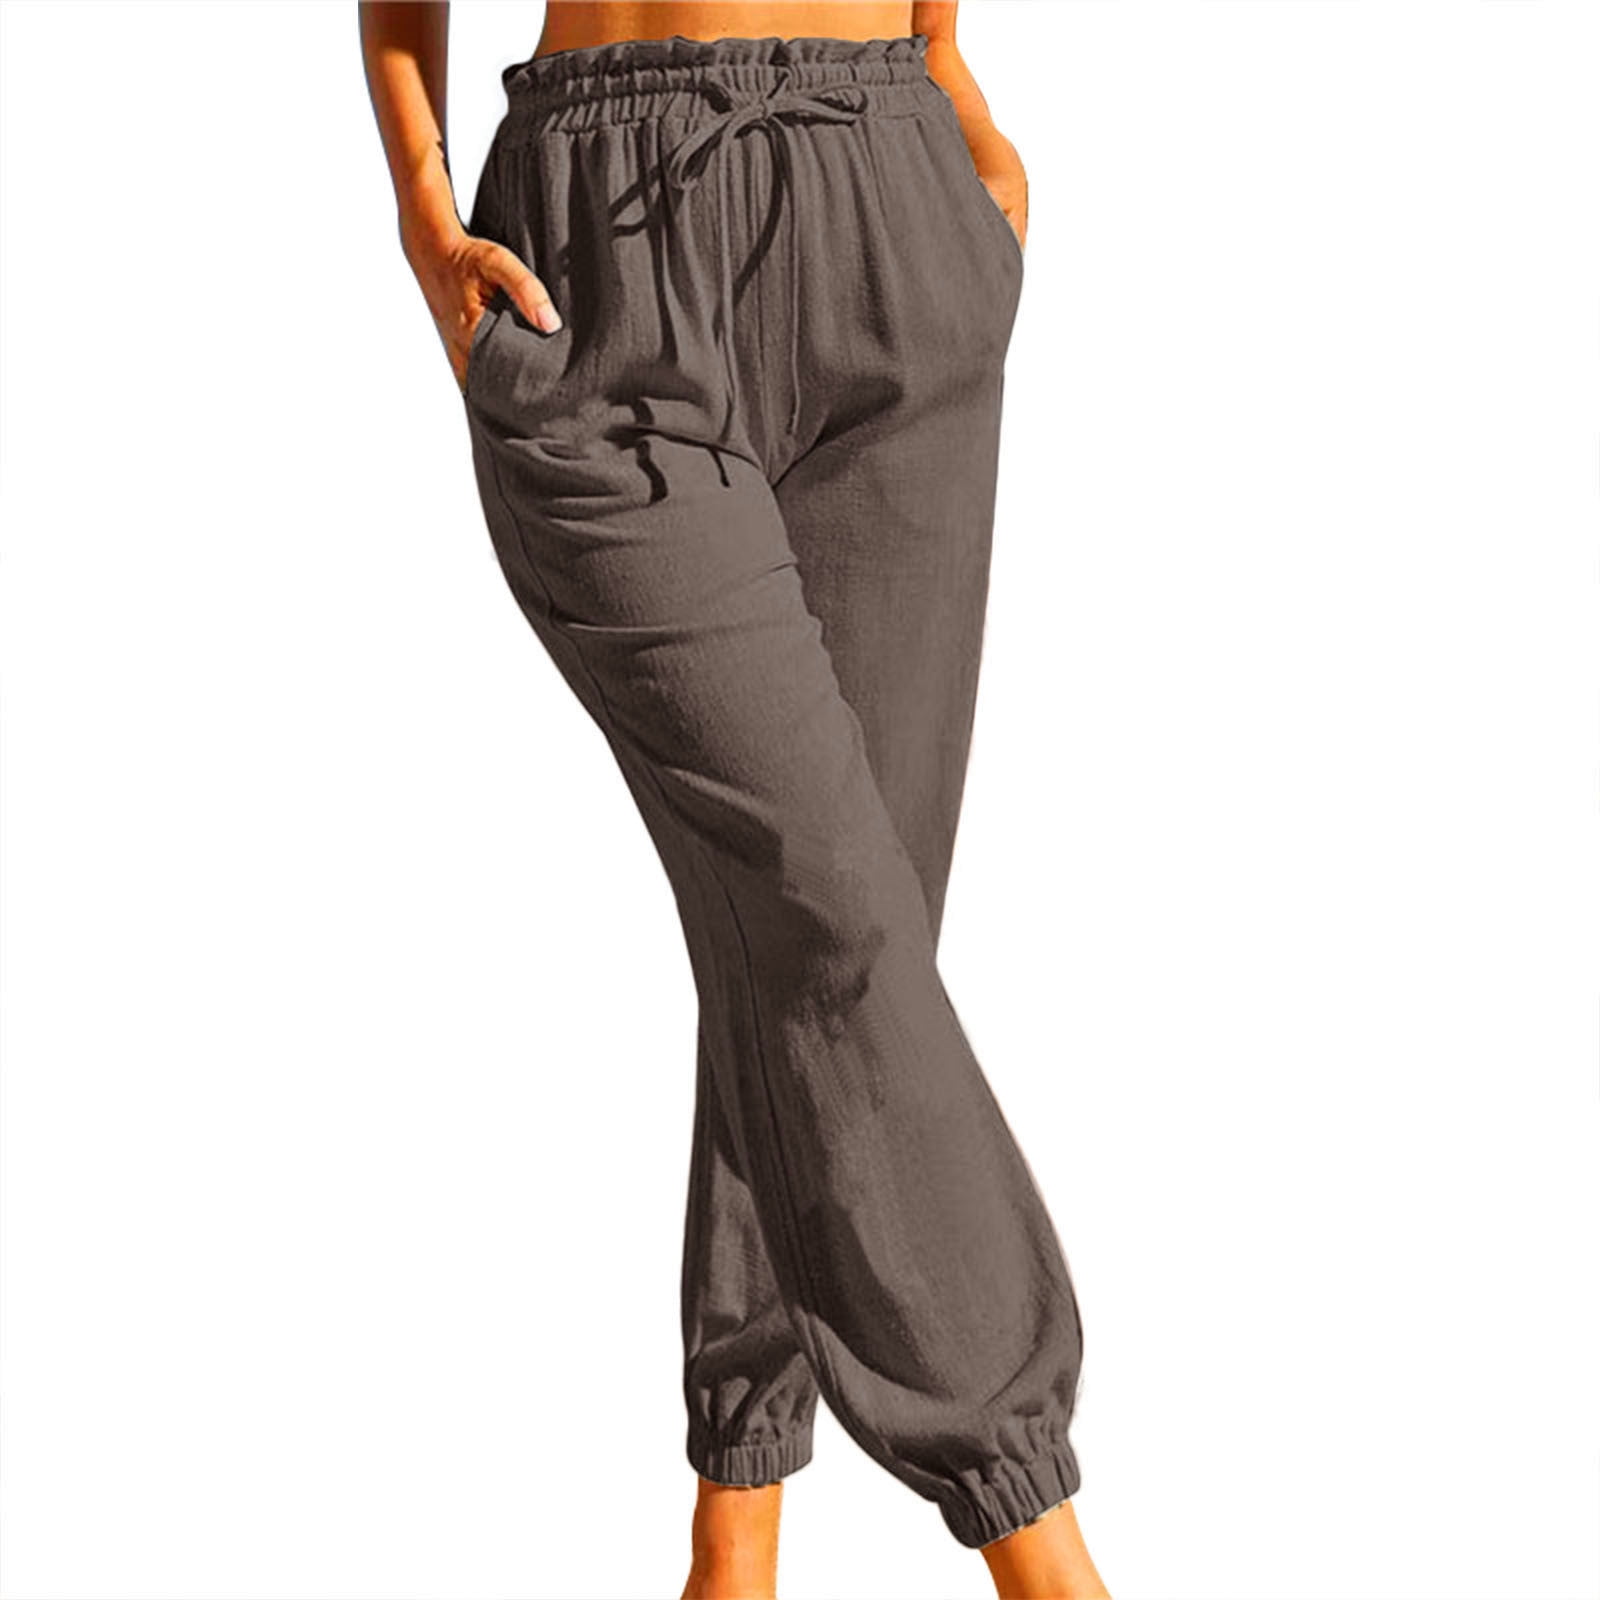 KaLI_store Yoga Pants Women's Dress Pants High Waisted Wear to